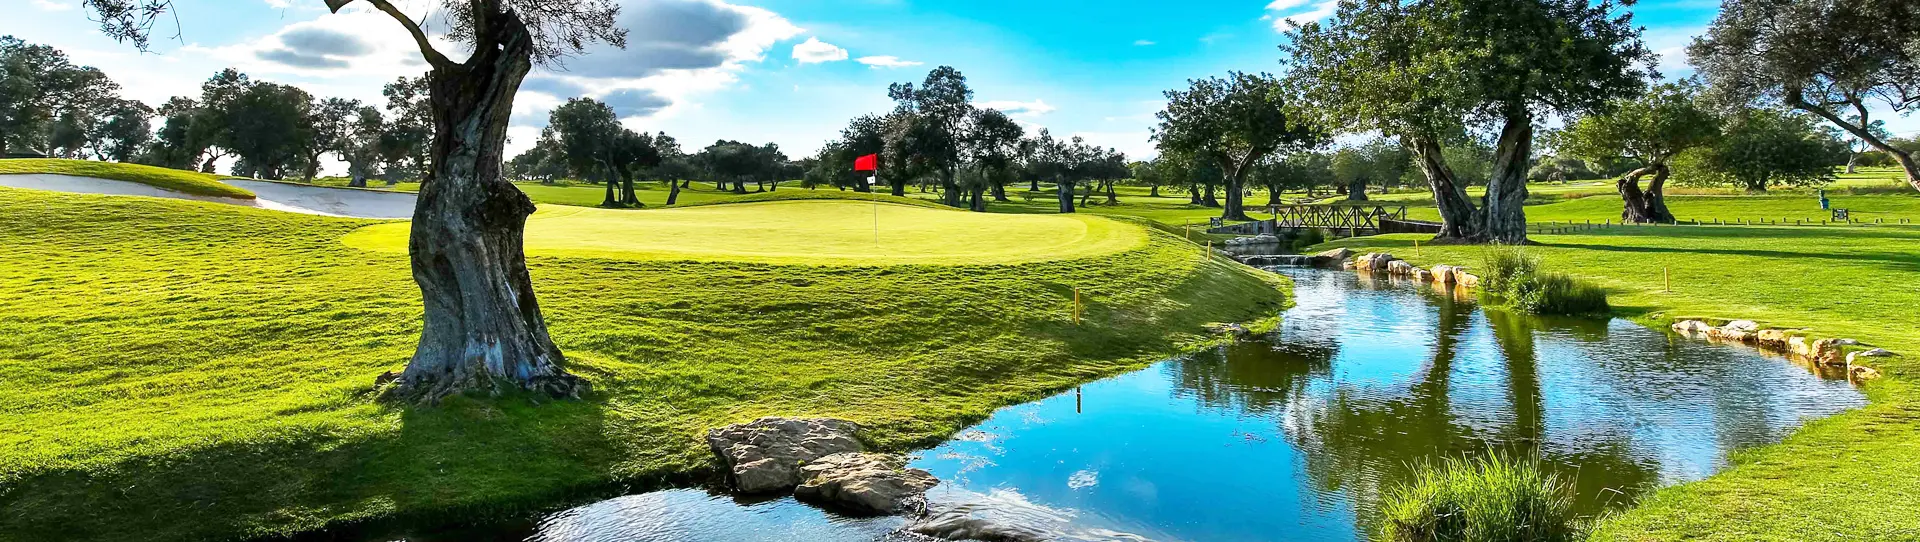 Portugal golf courses - Quinta de Cima Golf Course - Photo 1